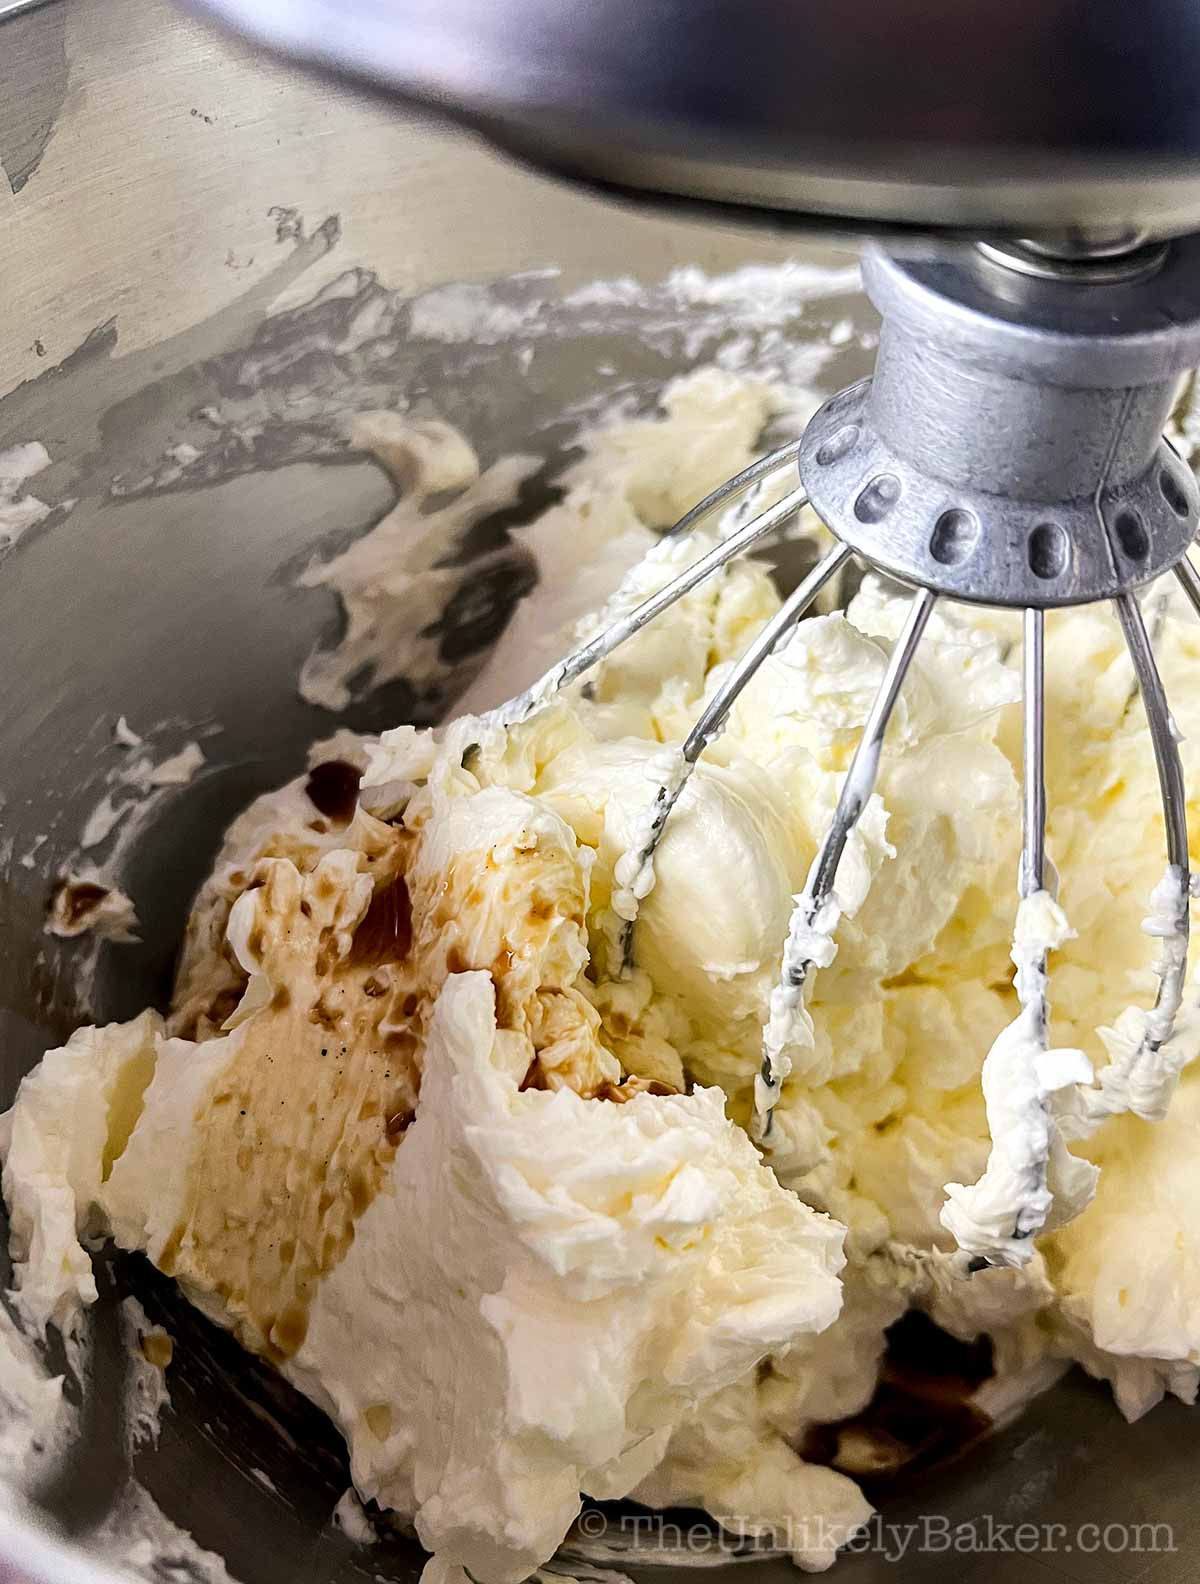 Vanilla extract added to Swiss meringue buttercream.